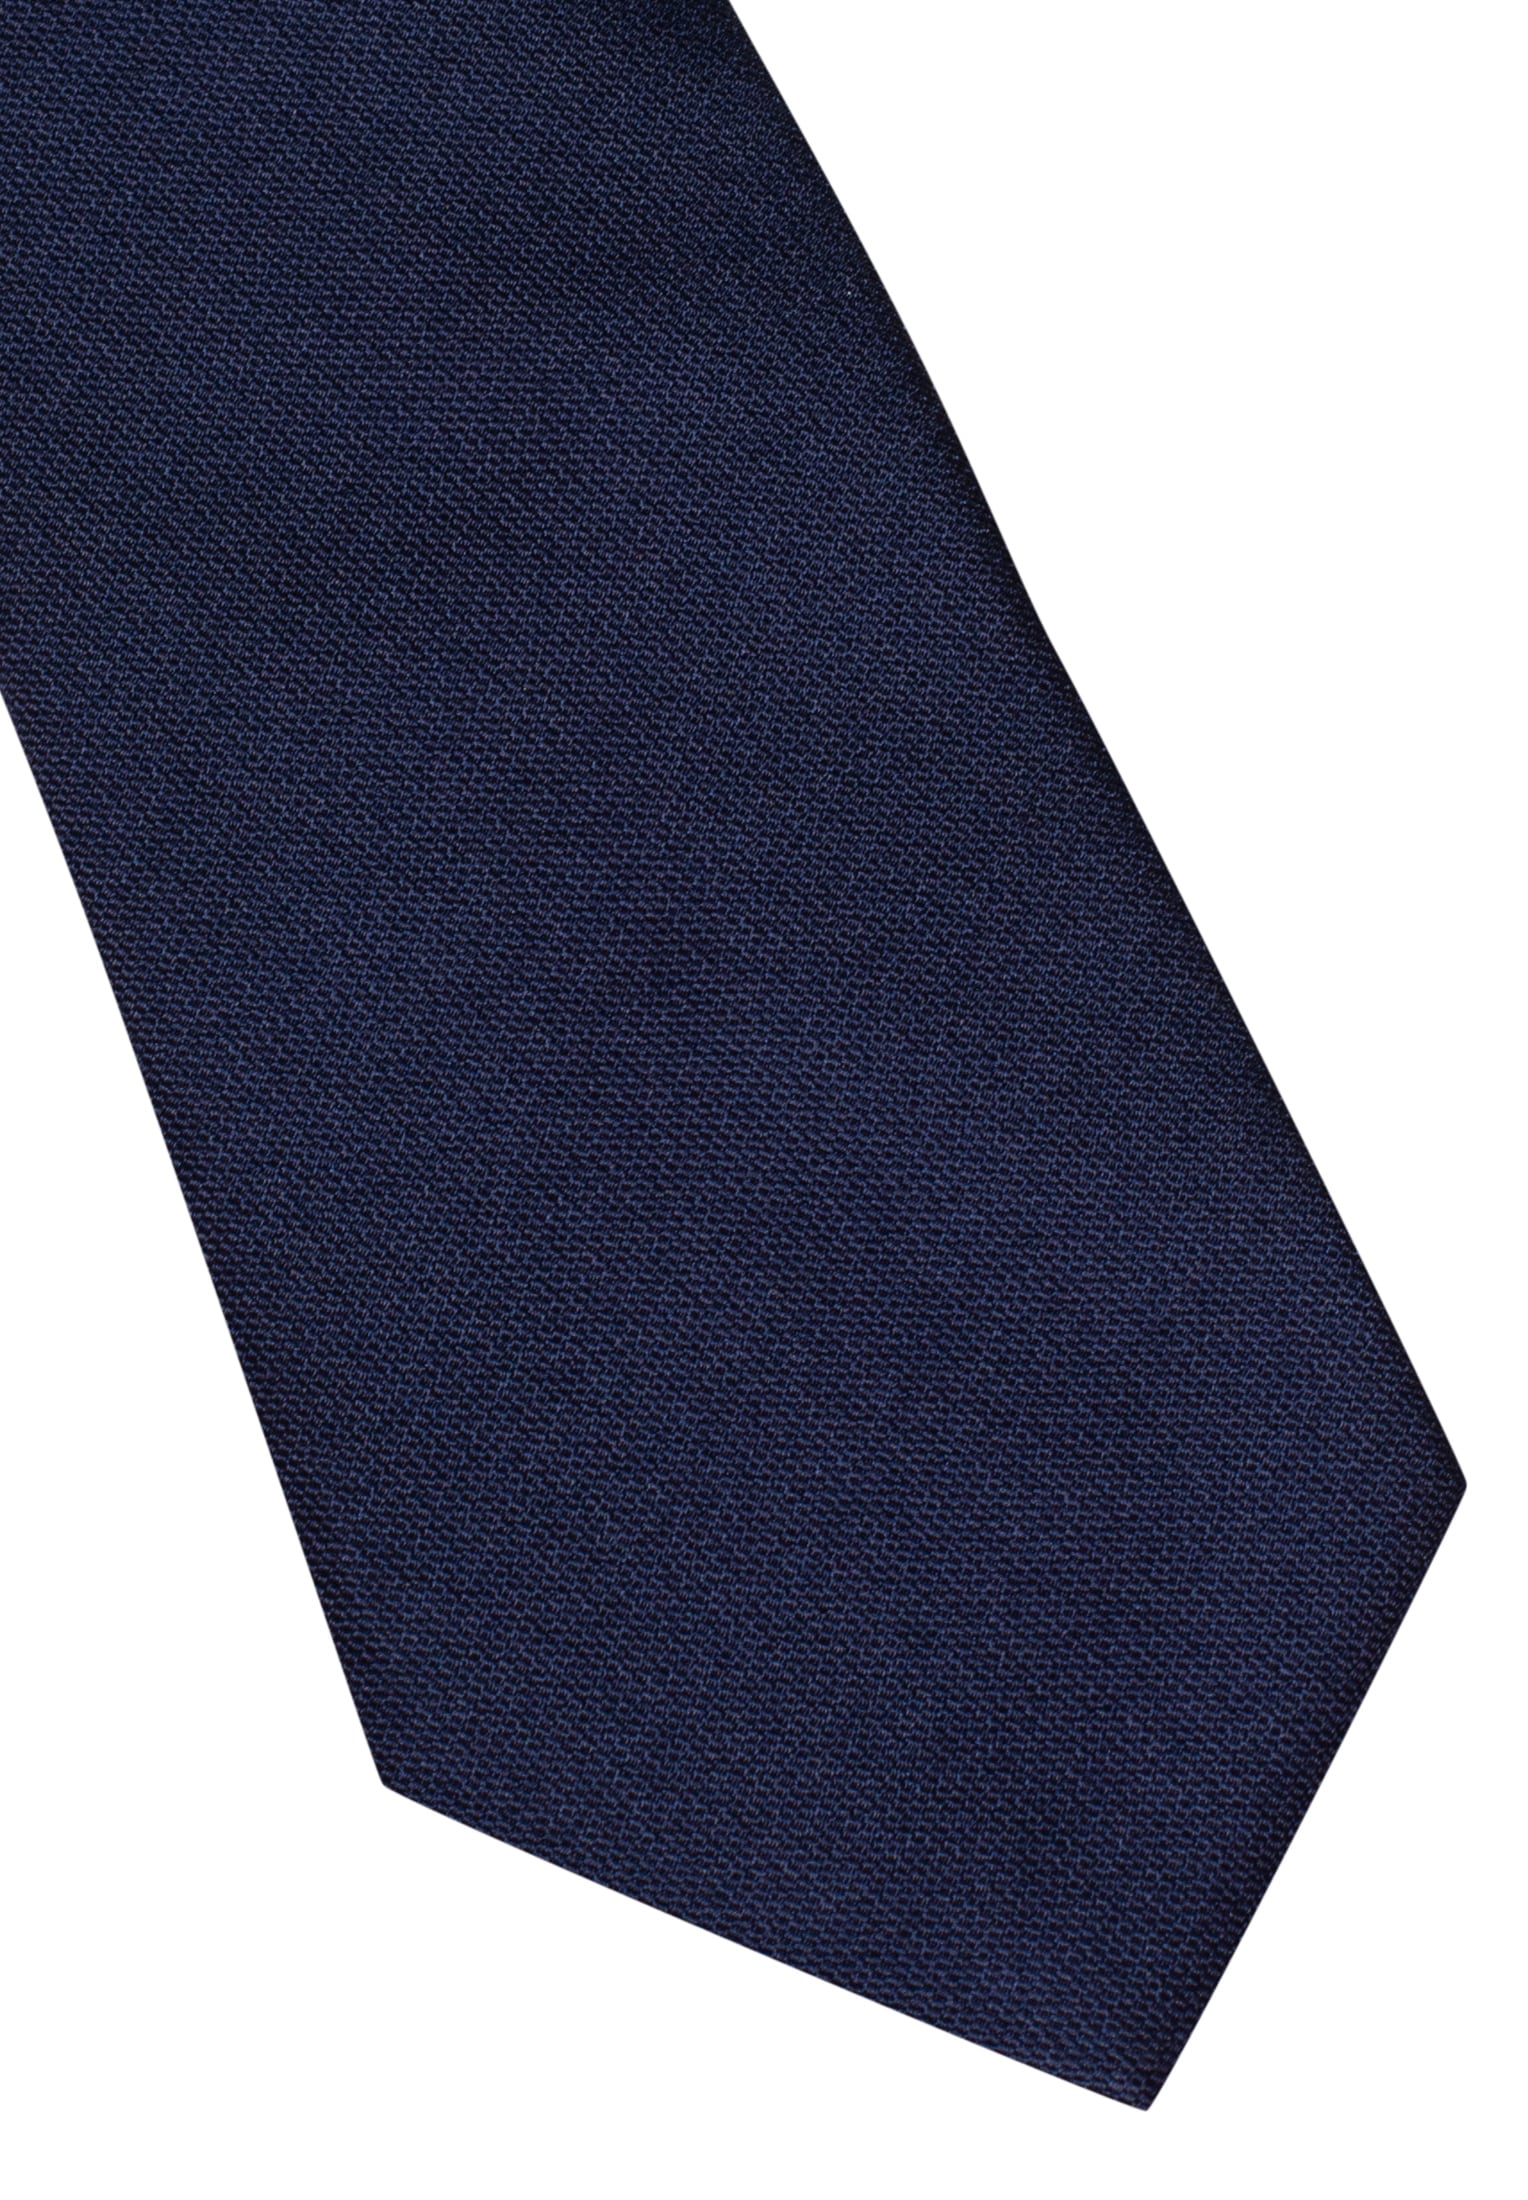 Cravate Bleu marine uni